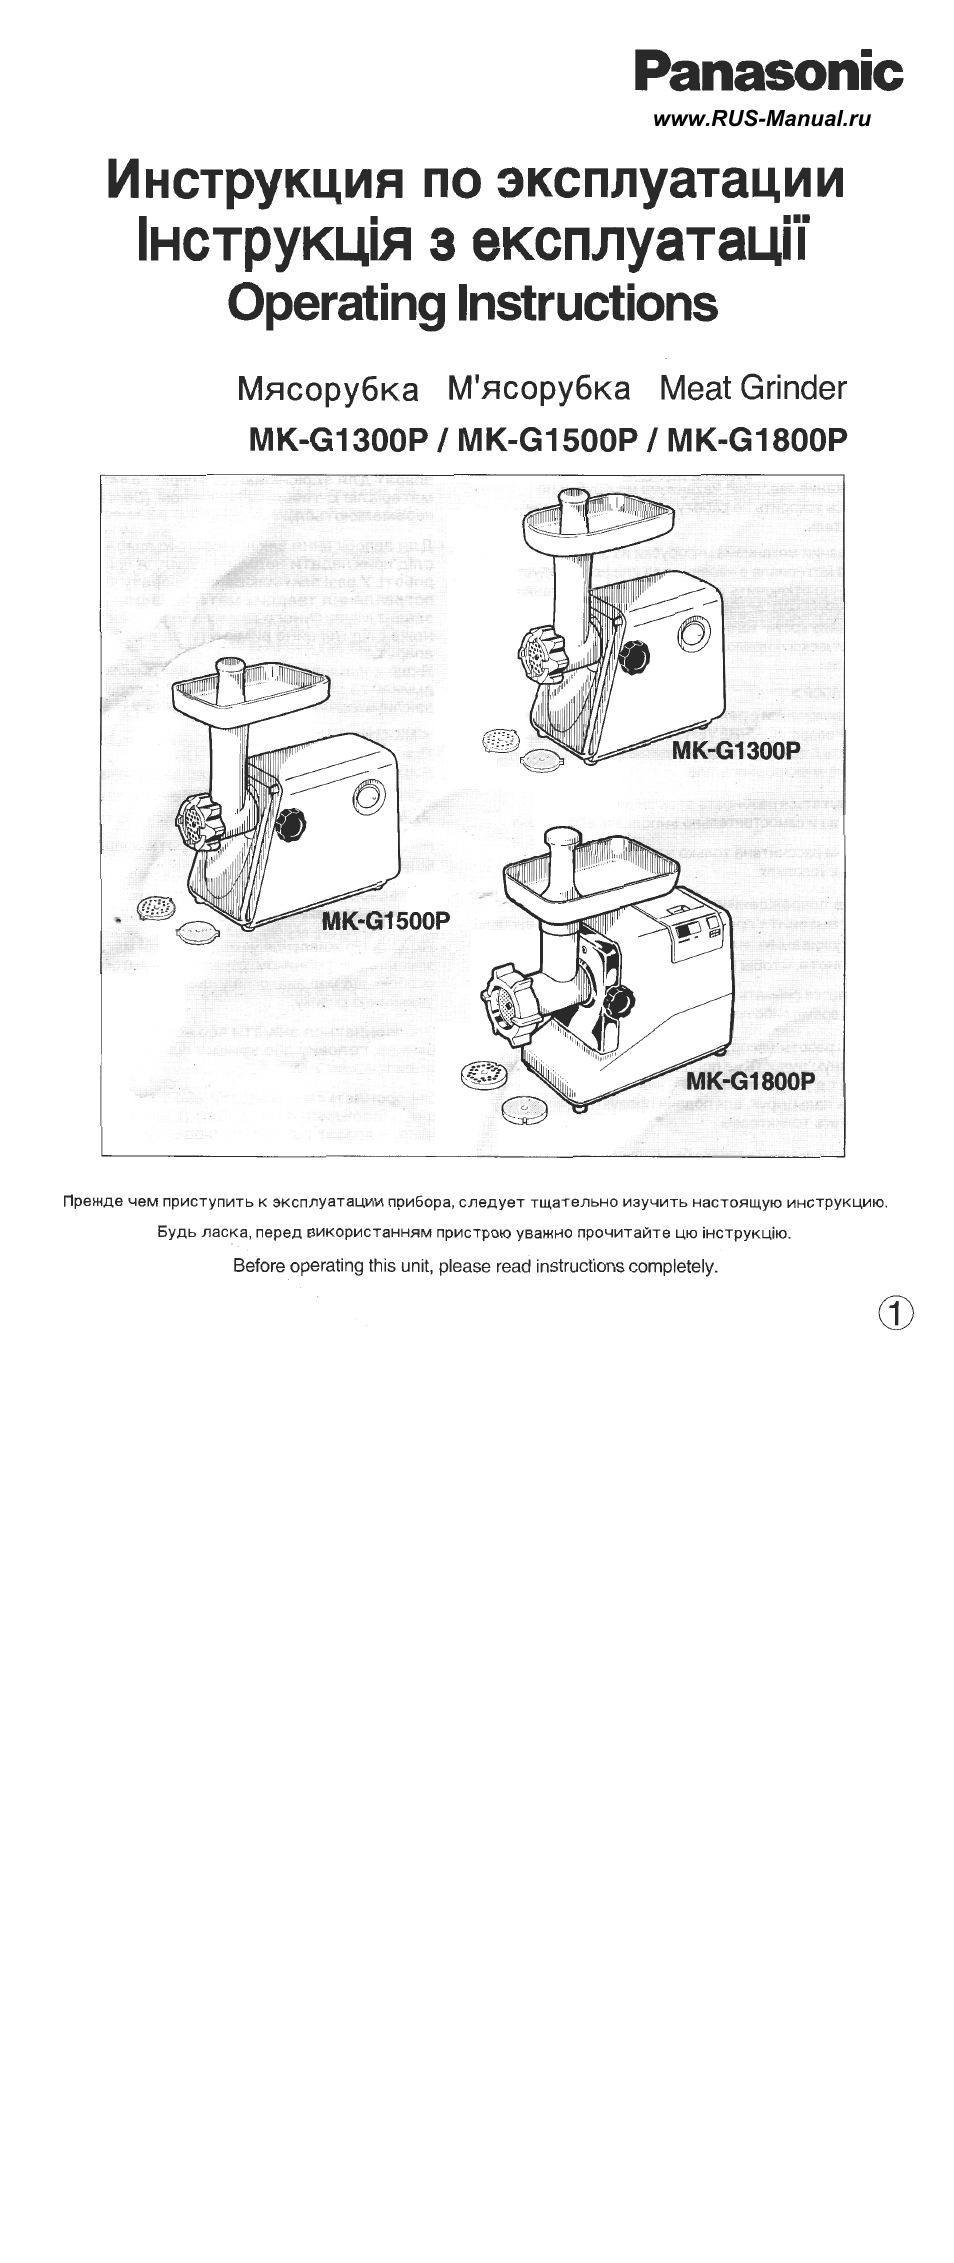 Инструкция по эксплуатации Panasonic MK-G1500P | 12 страниц